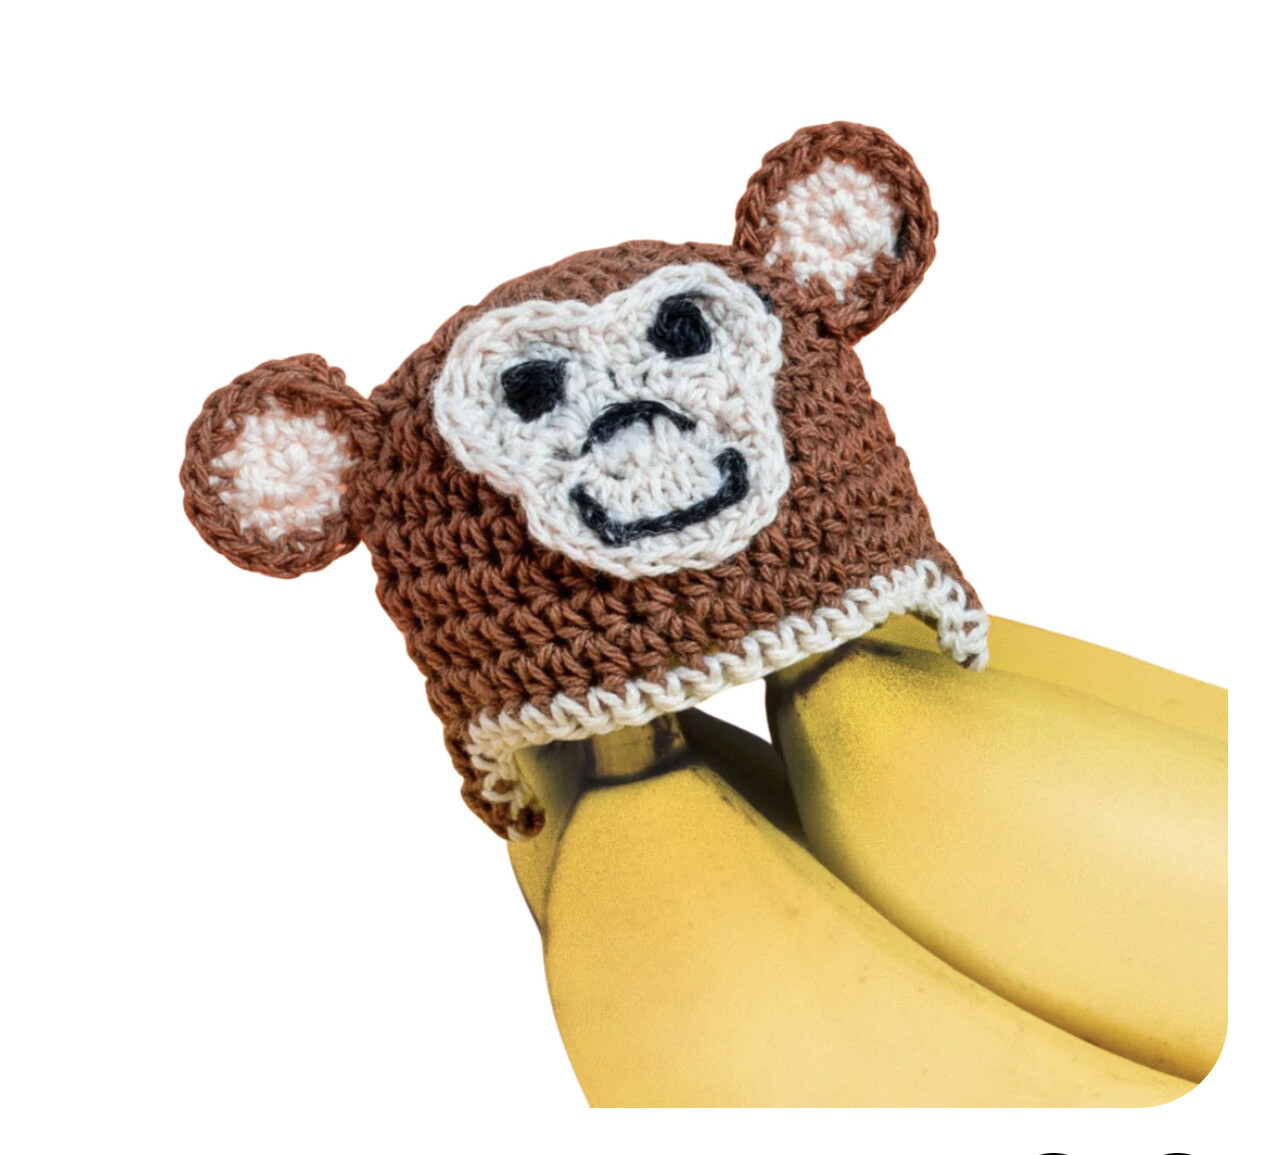 Nana Hats - Keep Your Bananas Fresh So Much Longer!